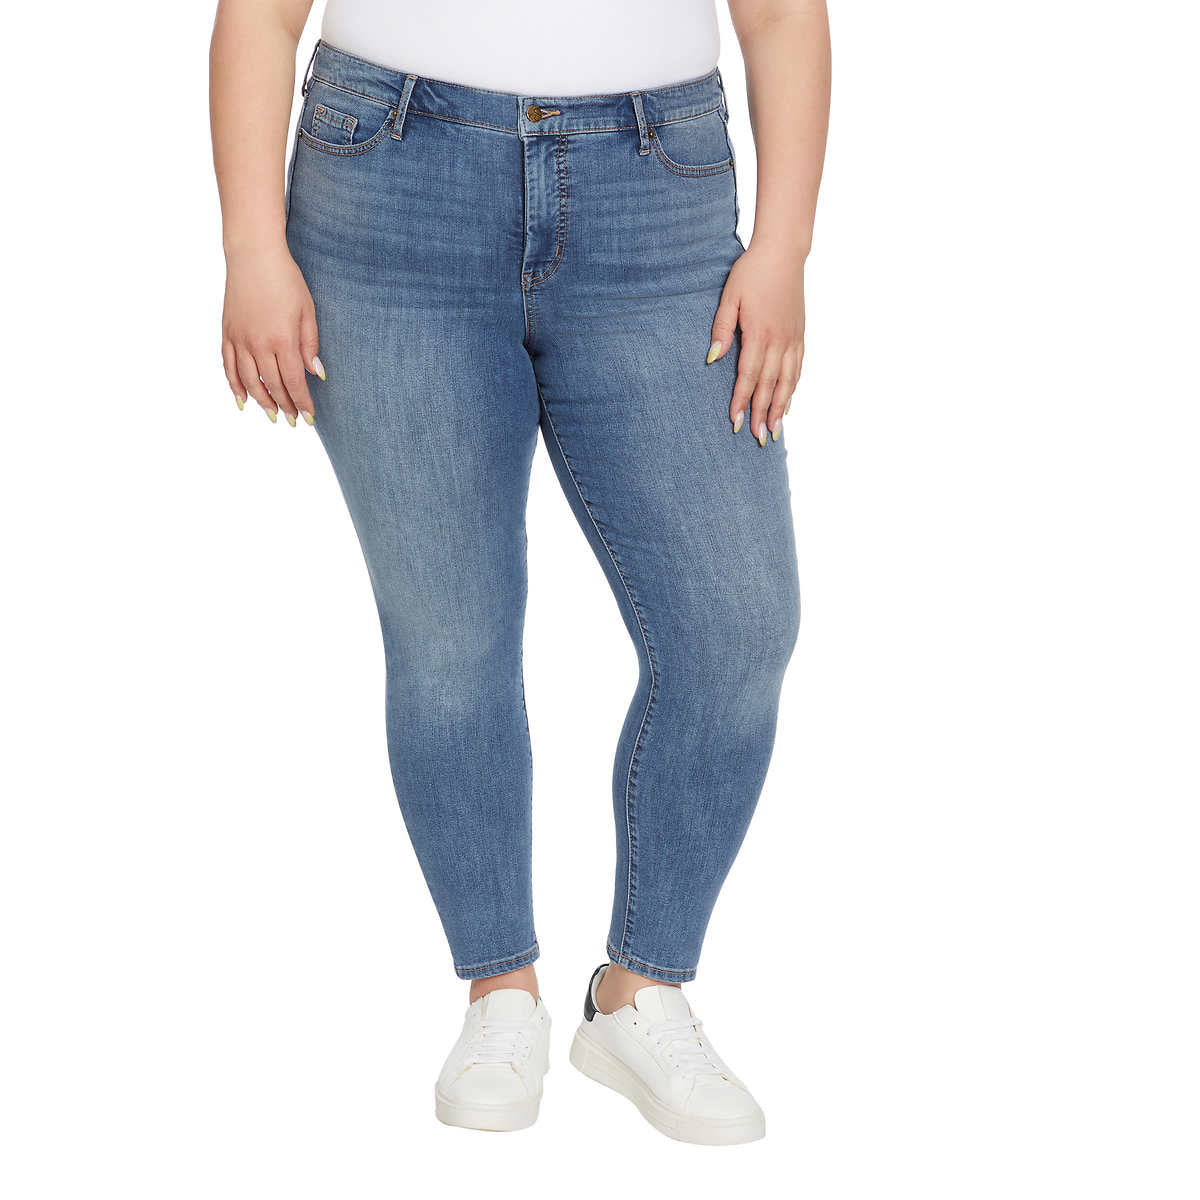 Jessica Simpson Women's High Rise Slim Jeans